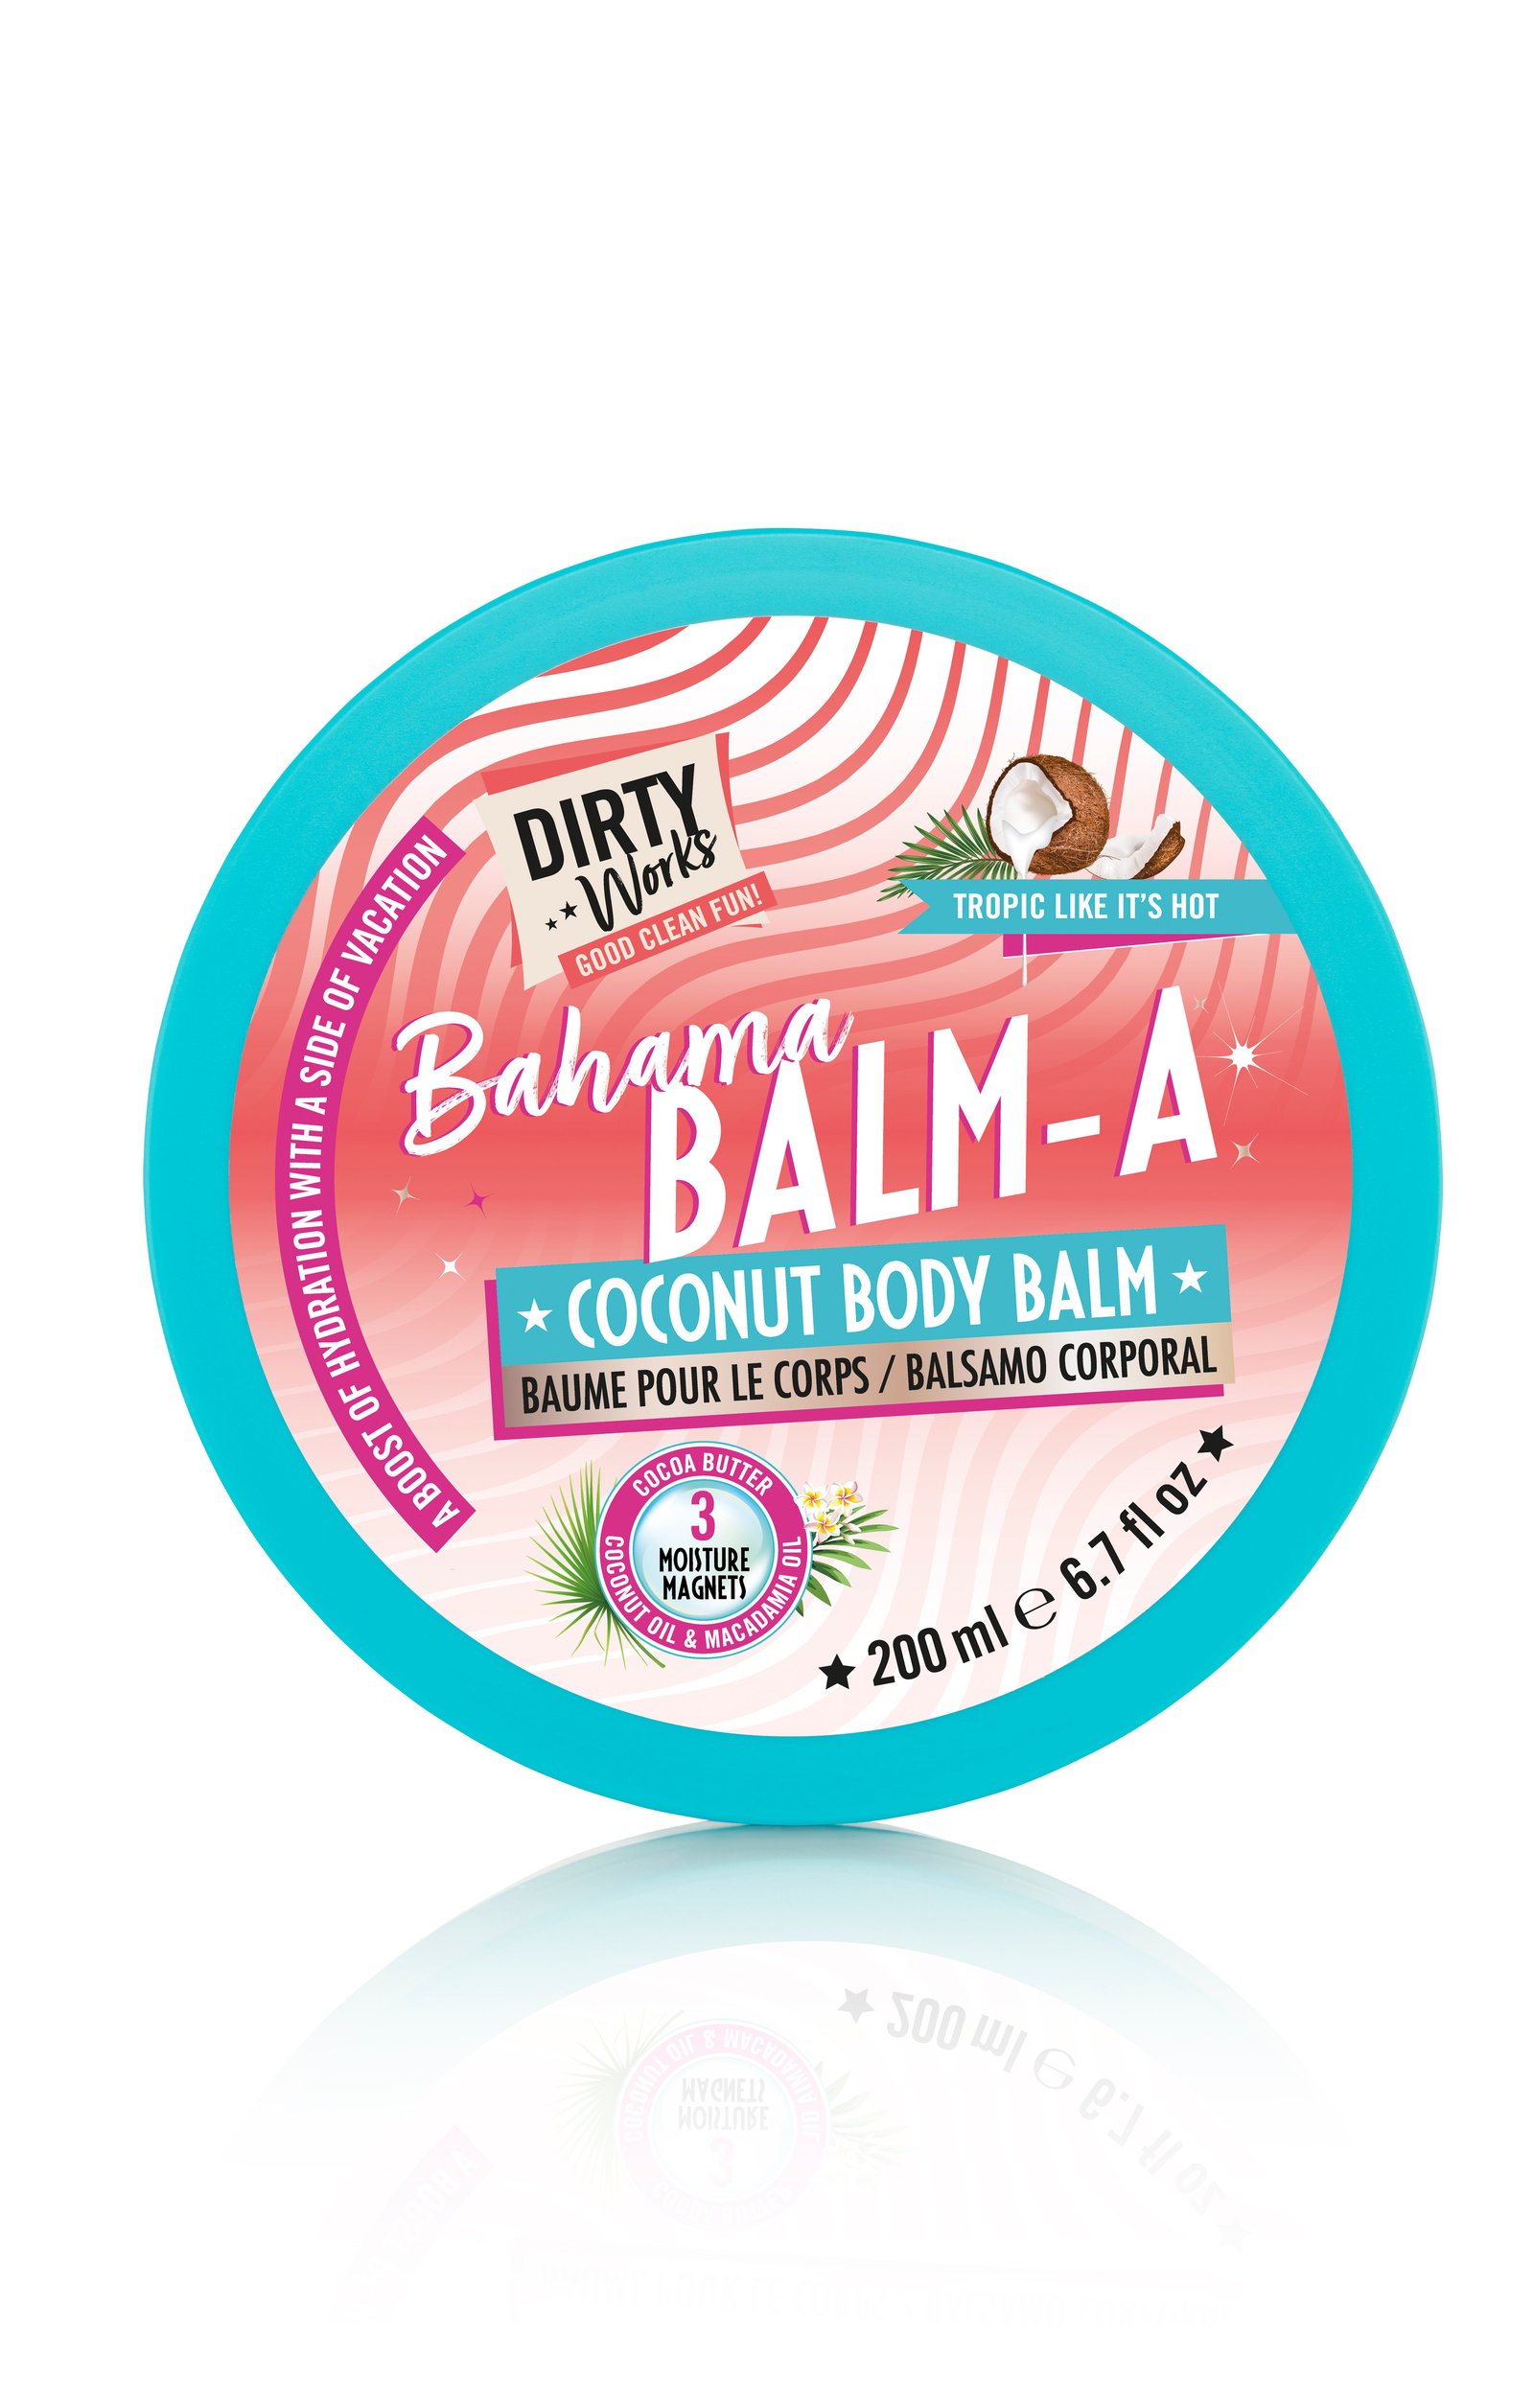 Dirty Works Bahama Balm-A Coconut Body Balm 200 ml